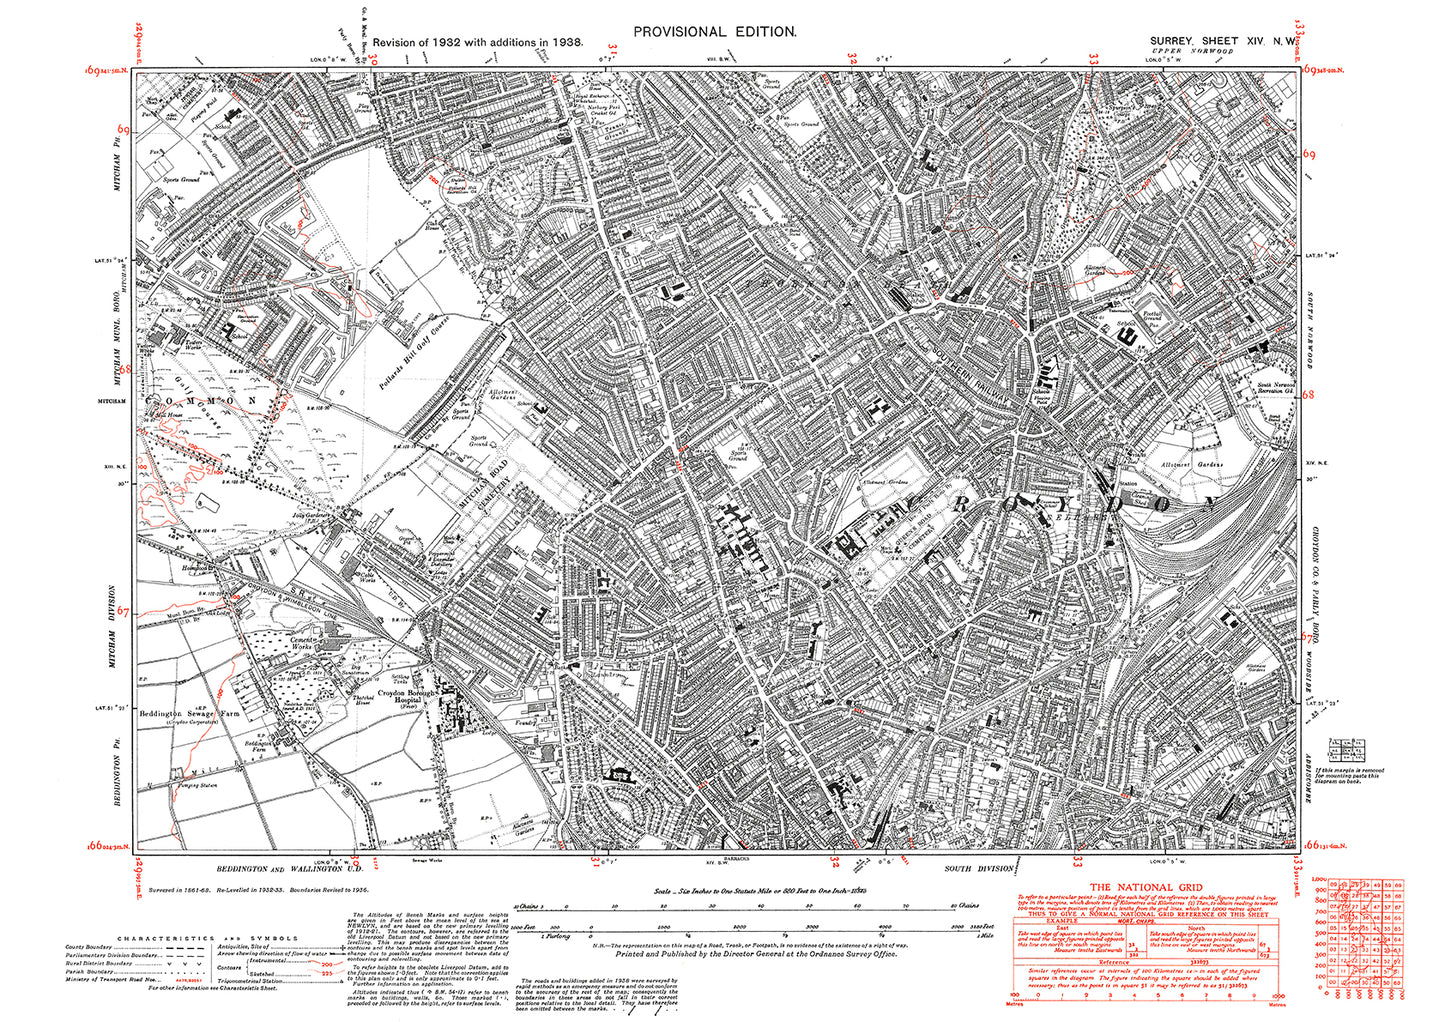 Croydon (north), Mitcham (east), Thornton old map Surrey 1938: 14NW